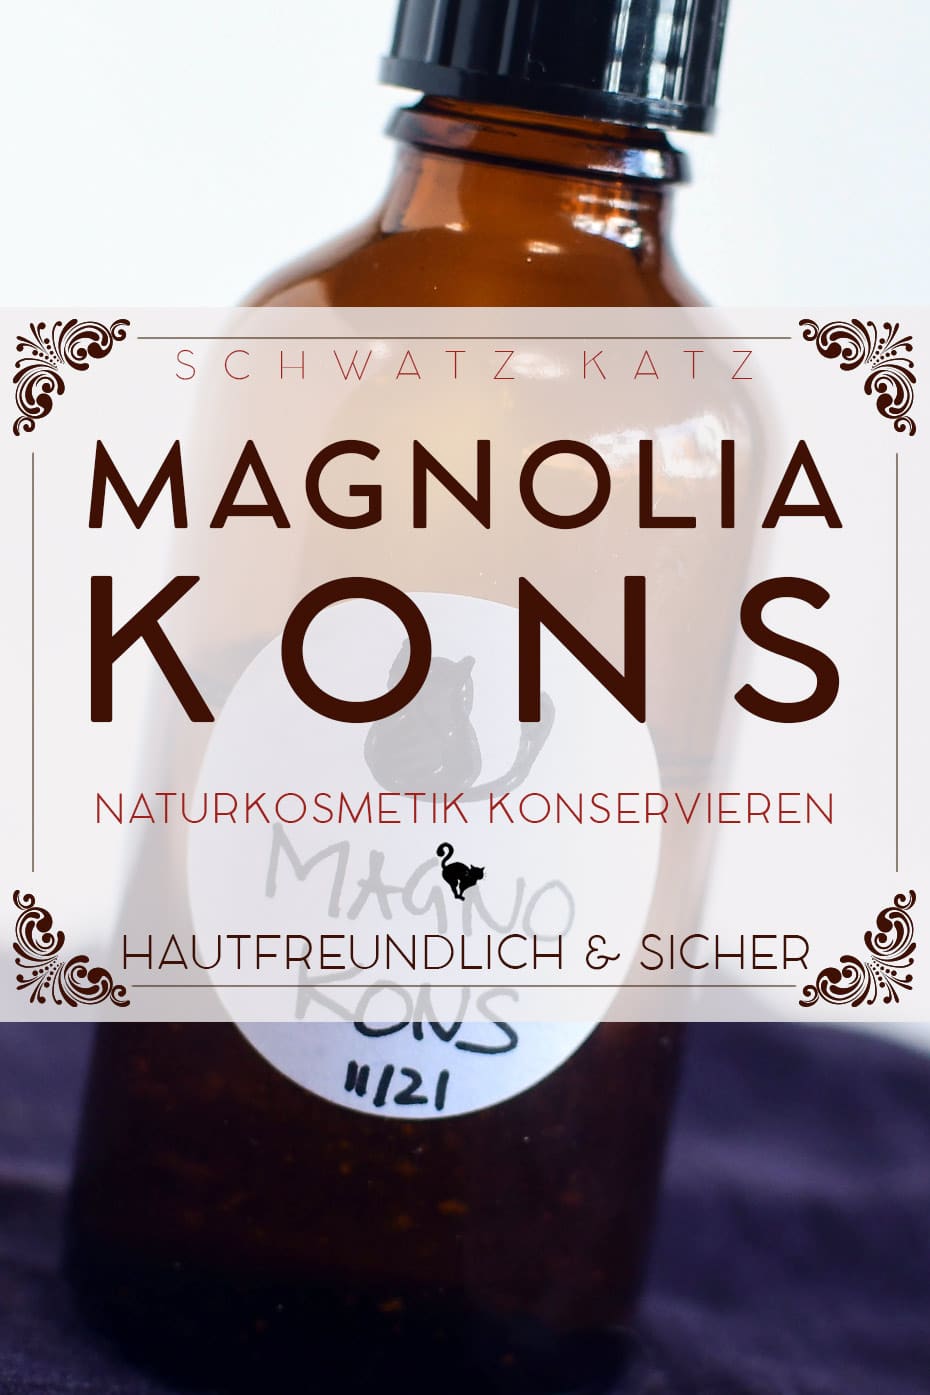 Naturkosmetik konservieren mit »Magnolia Kons« | Schwatz Katz